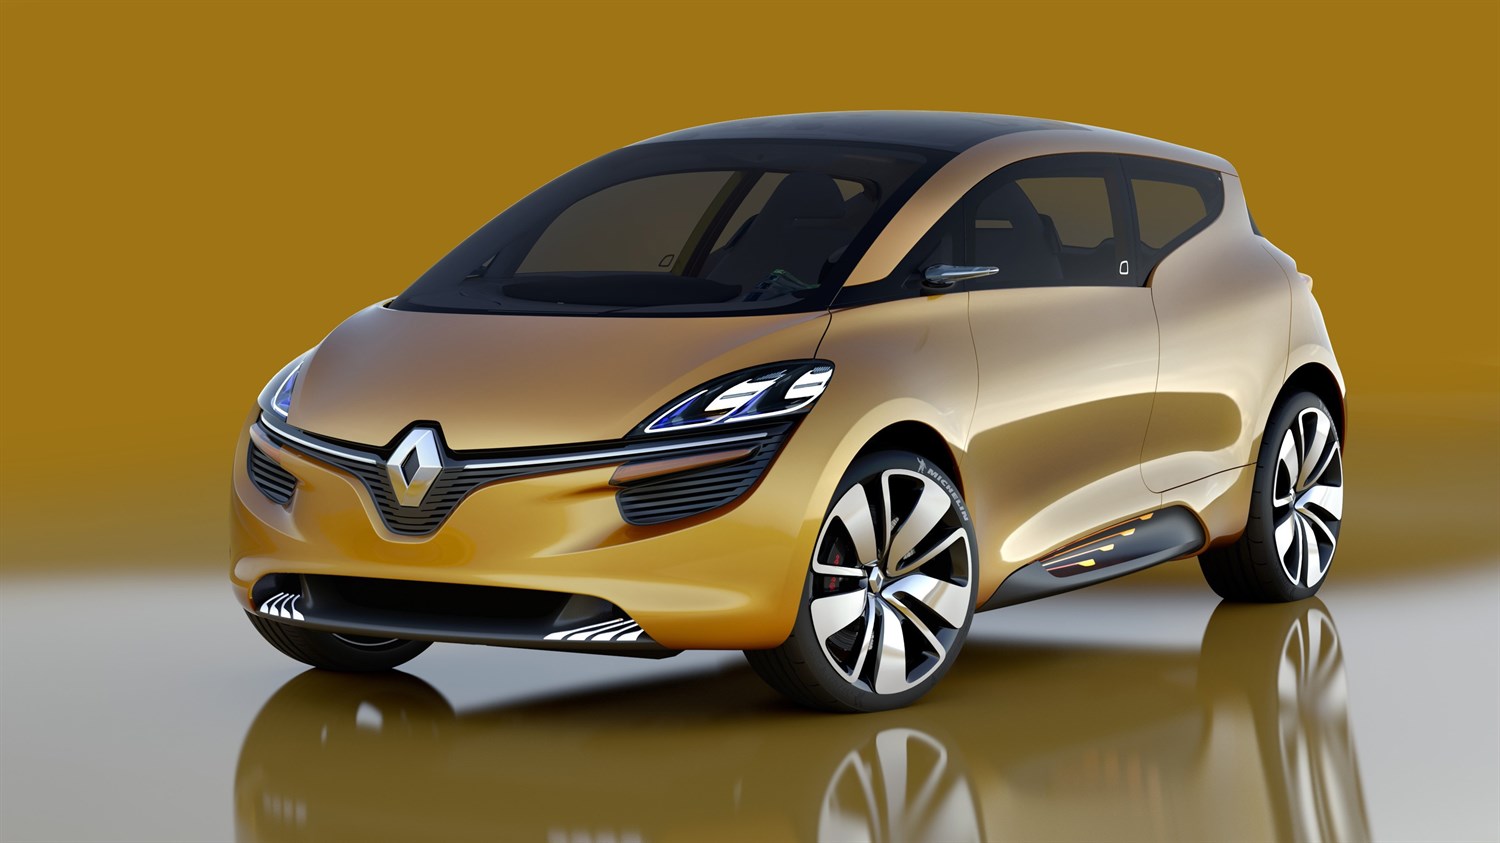 Renault R-Space concept car exterior design front side view